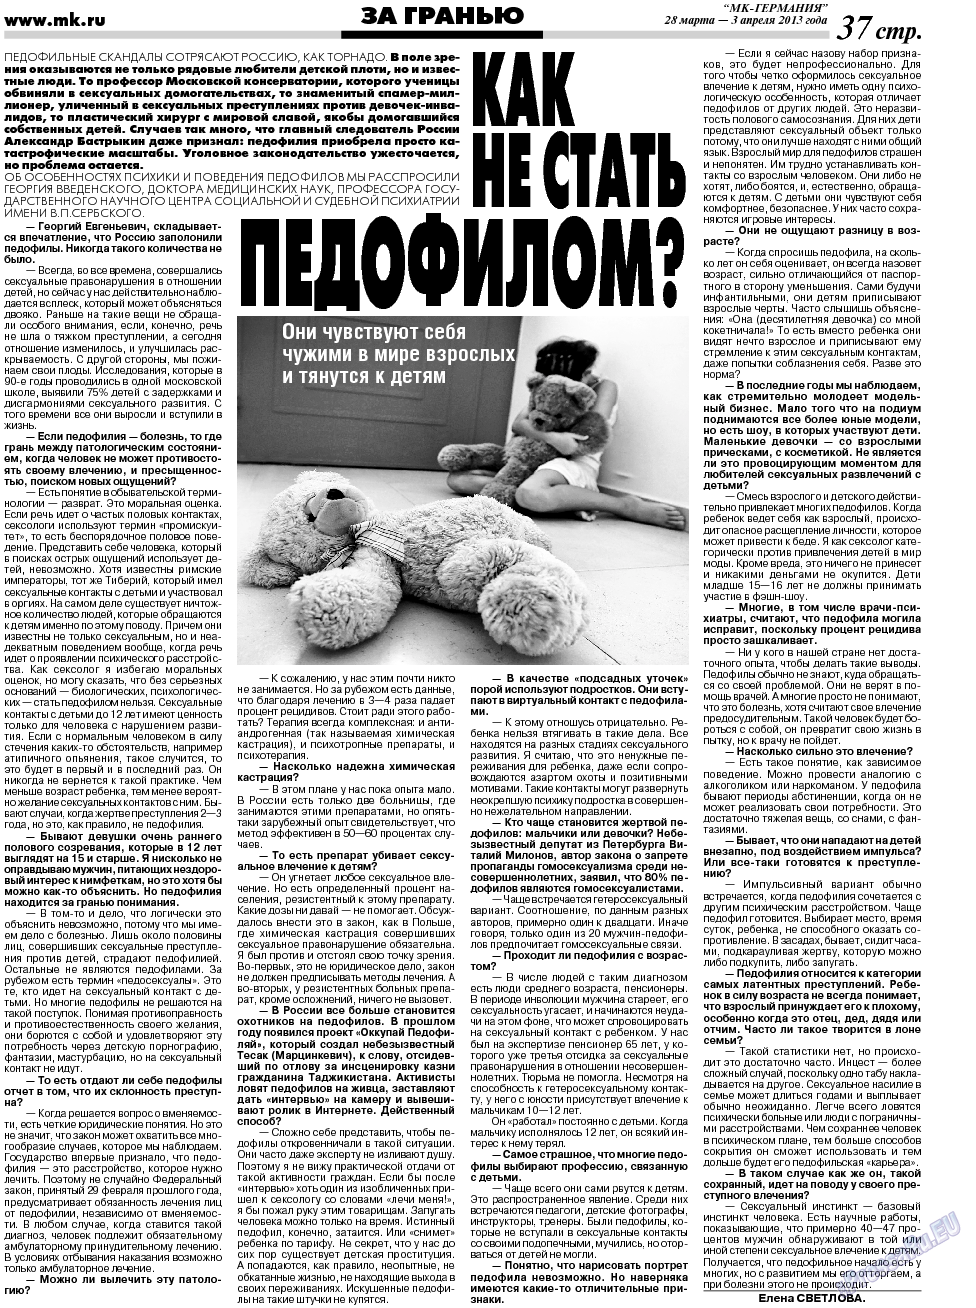 МК-Германия, газета. 2013 №13 стр.37